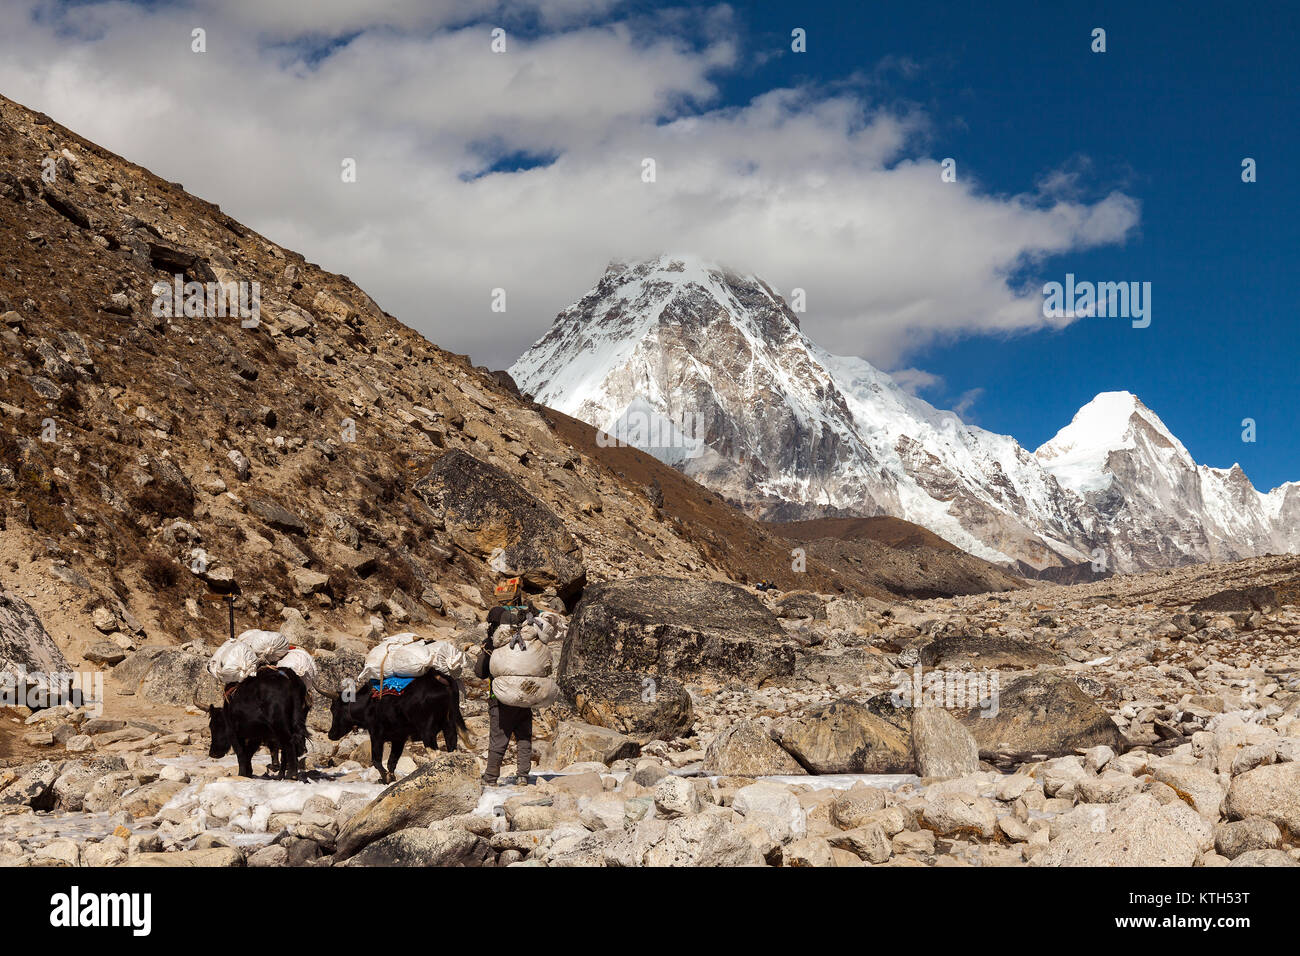 View from the mountain near Lobuche to Lhotse and Nuptse - Nepal, Himalayas Stock Photo